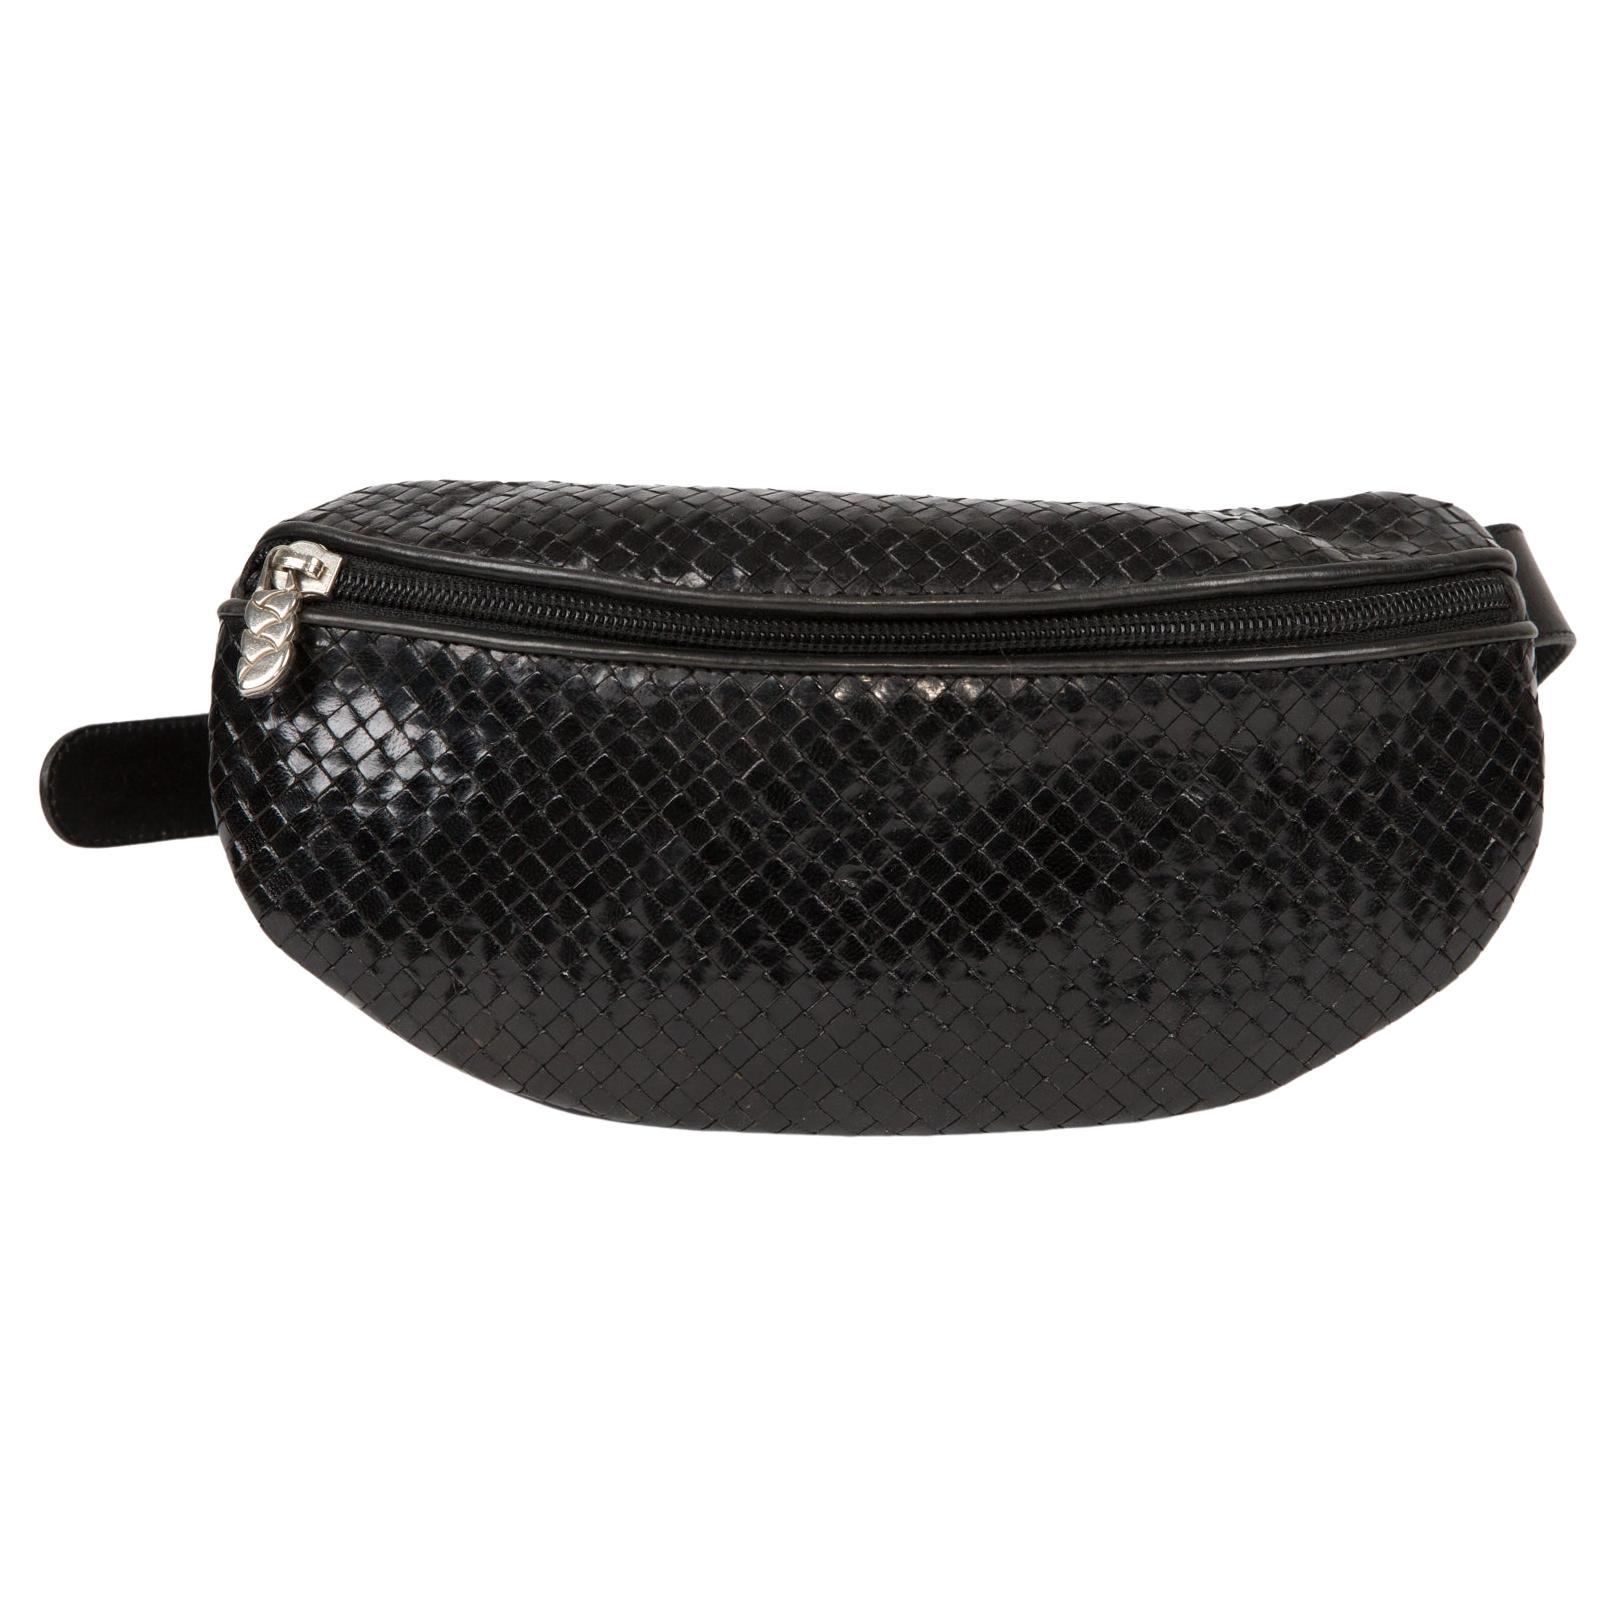 Stephane Kelian Black Leather Woven Belt Bag 